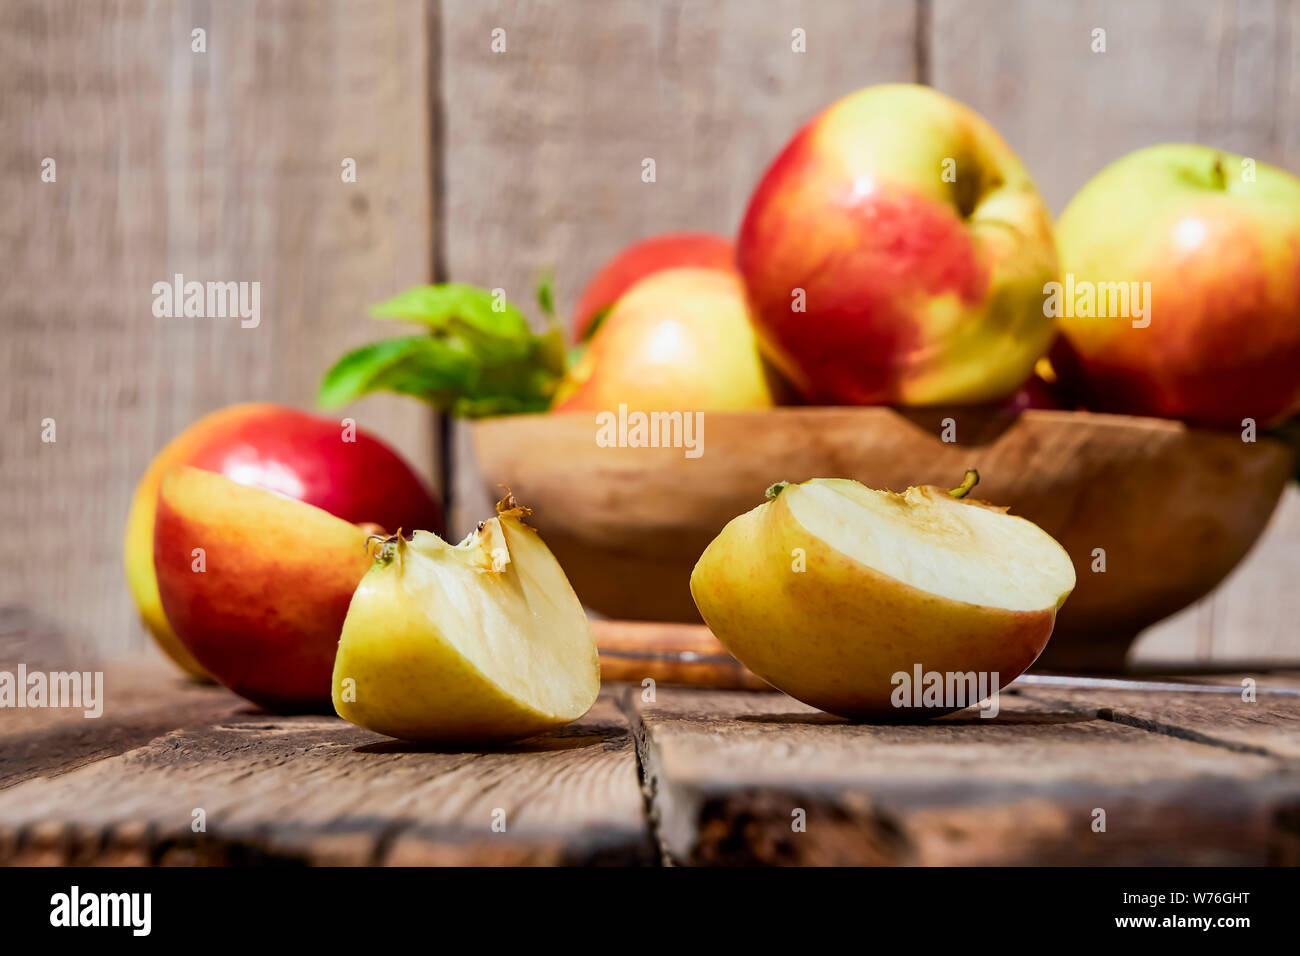 Fruit in Focus  Gala Apple - Fruit Salad Trees